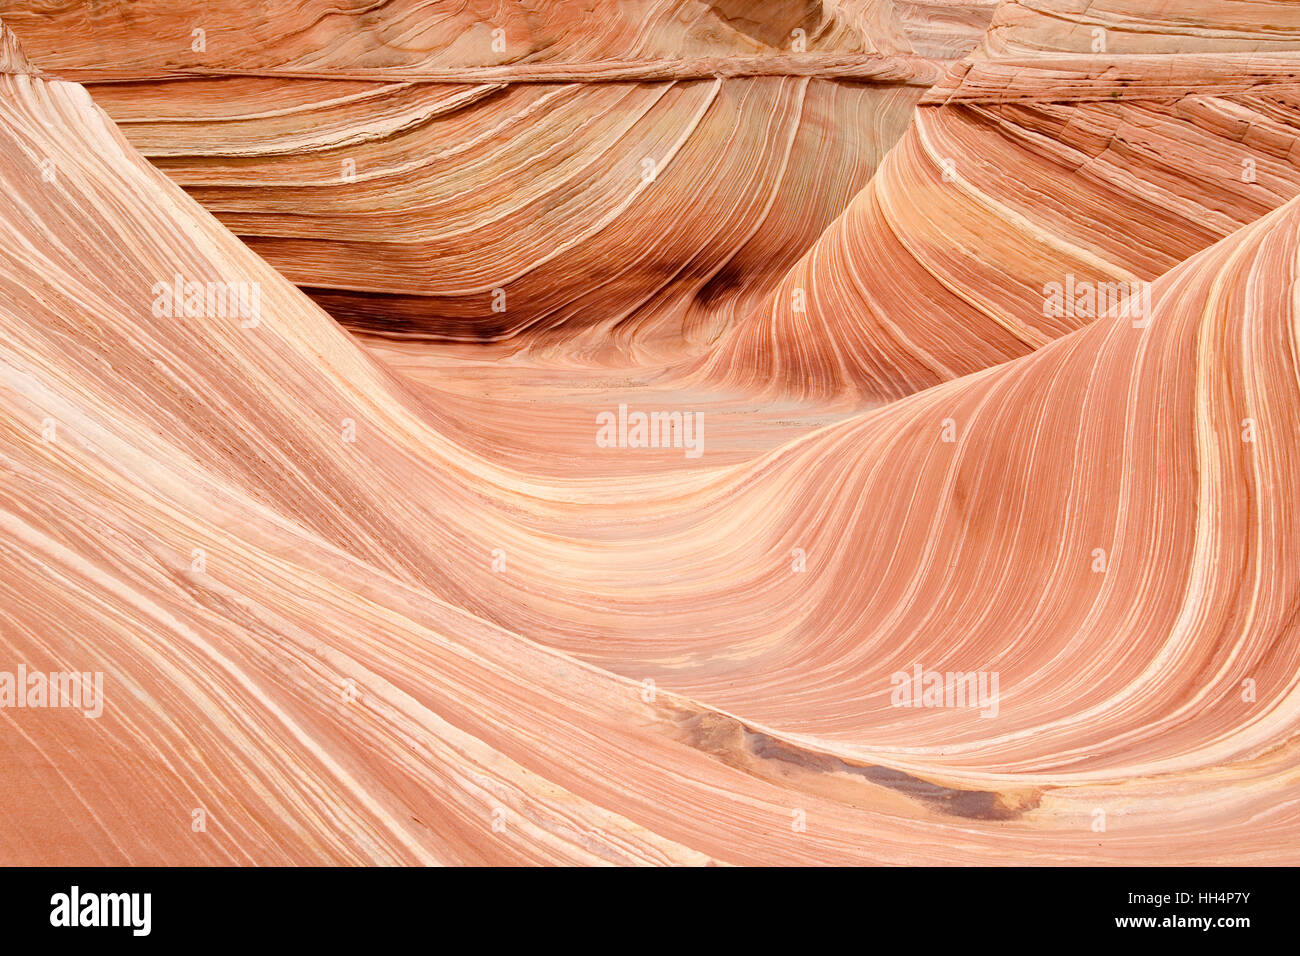 Die Welle. North Coyote Buttes. Vermilion Cliffs. Paria Canyon. Arizona. USA. Stockfoto